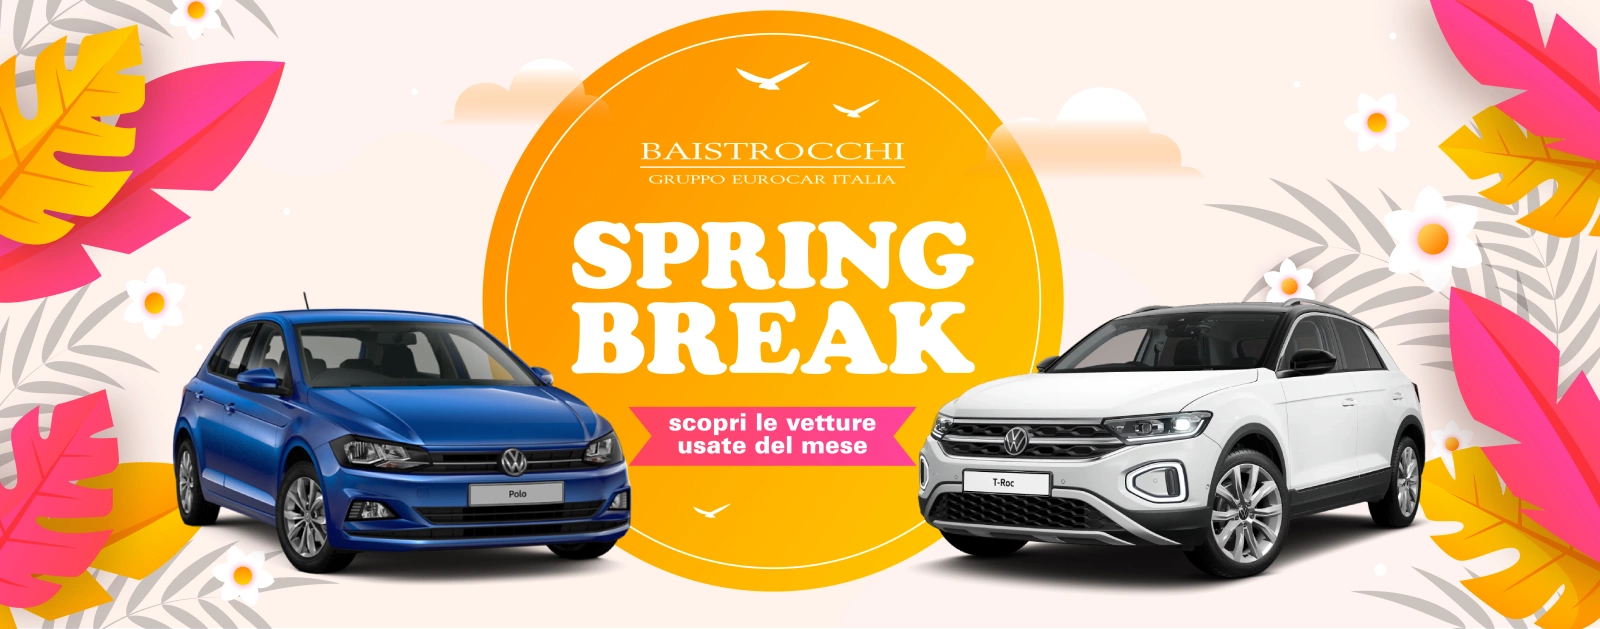 Baistrocchi presenta Spring Break! 🌹